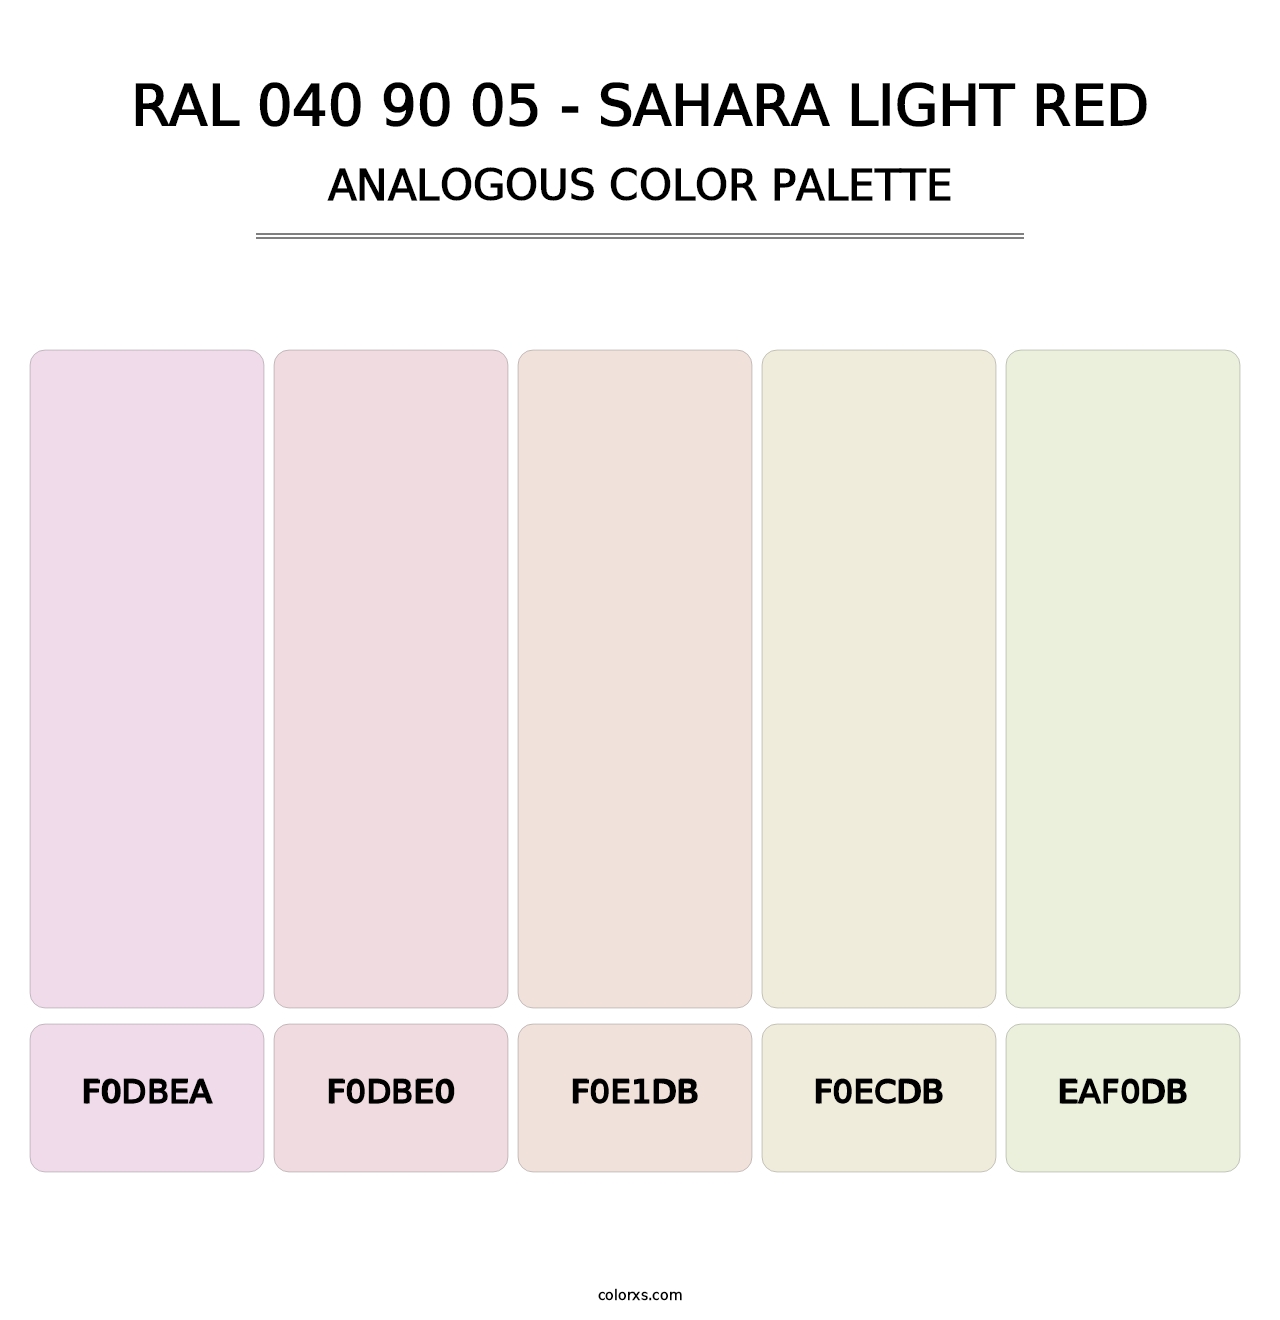 RAL 040 90 05 - Sahara Light Red - Analogous Color Palette